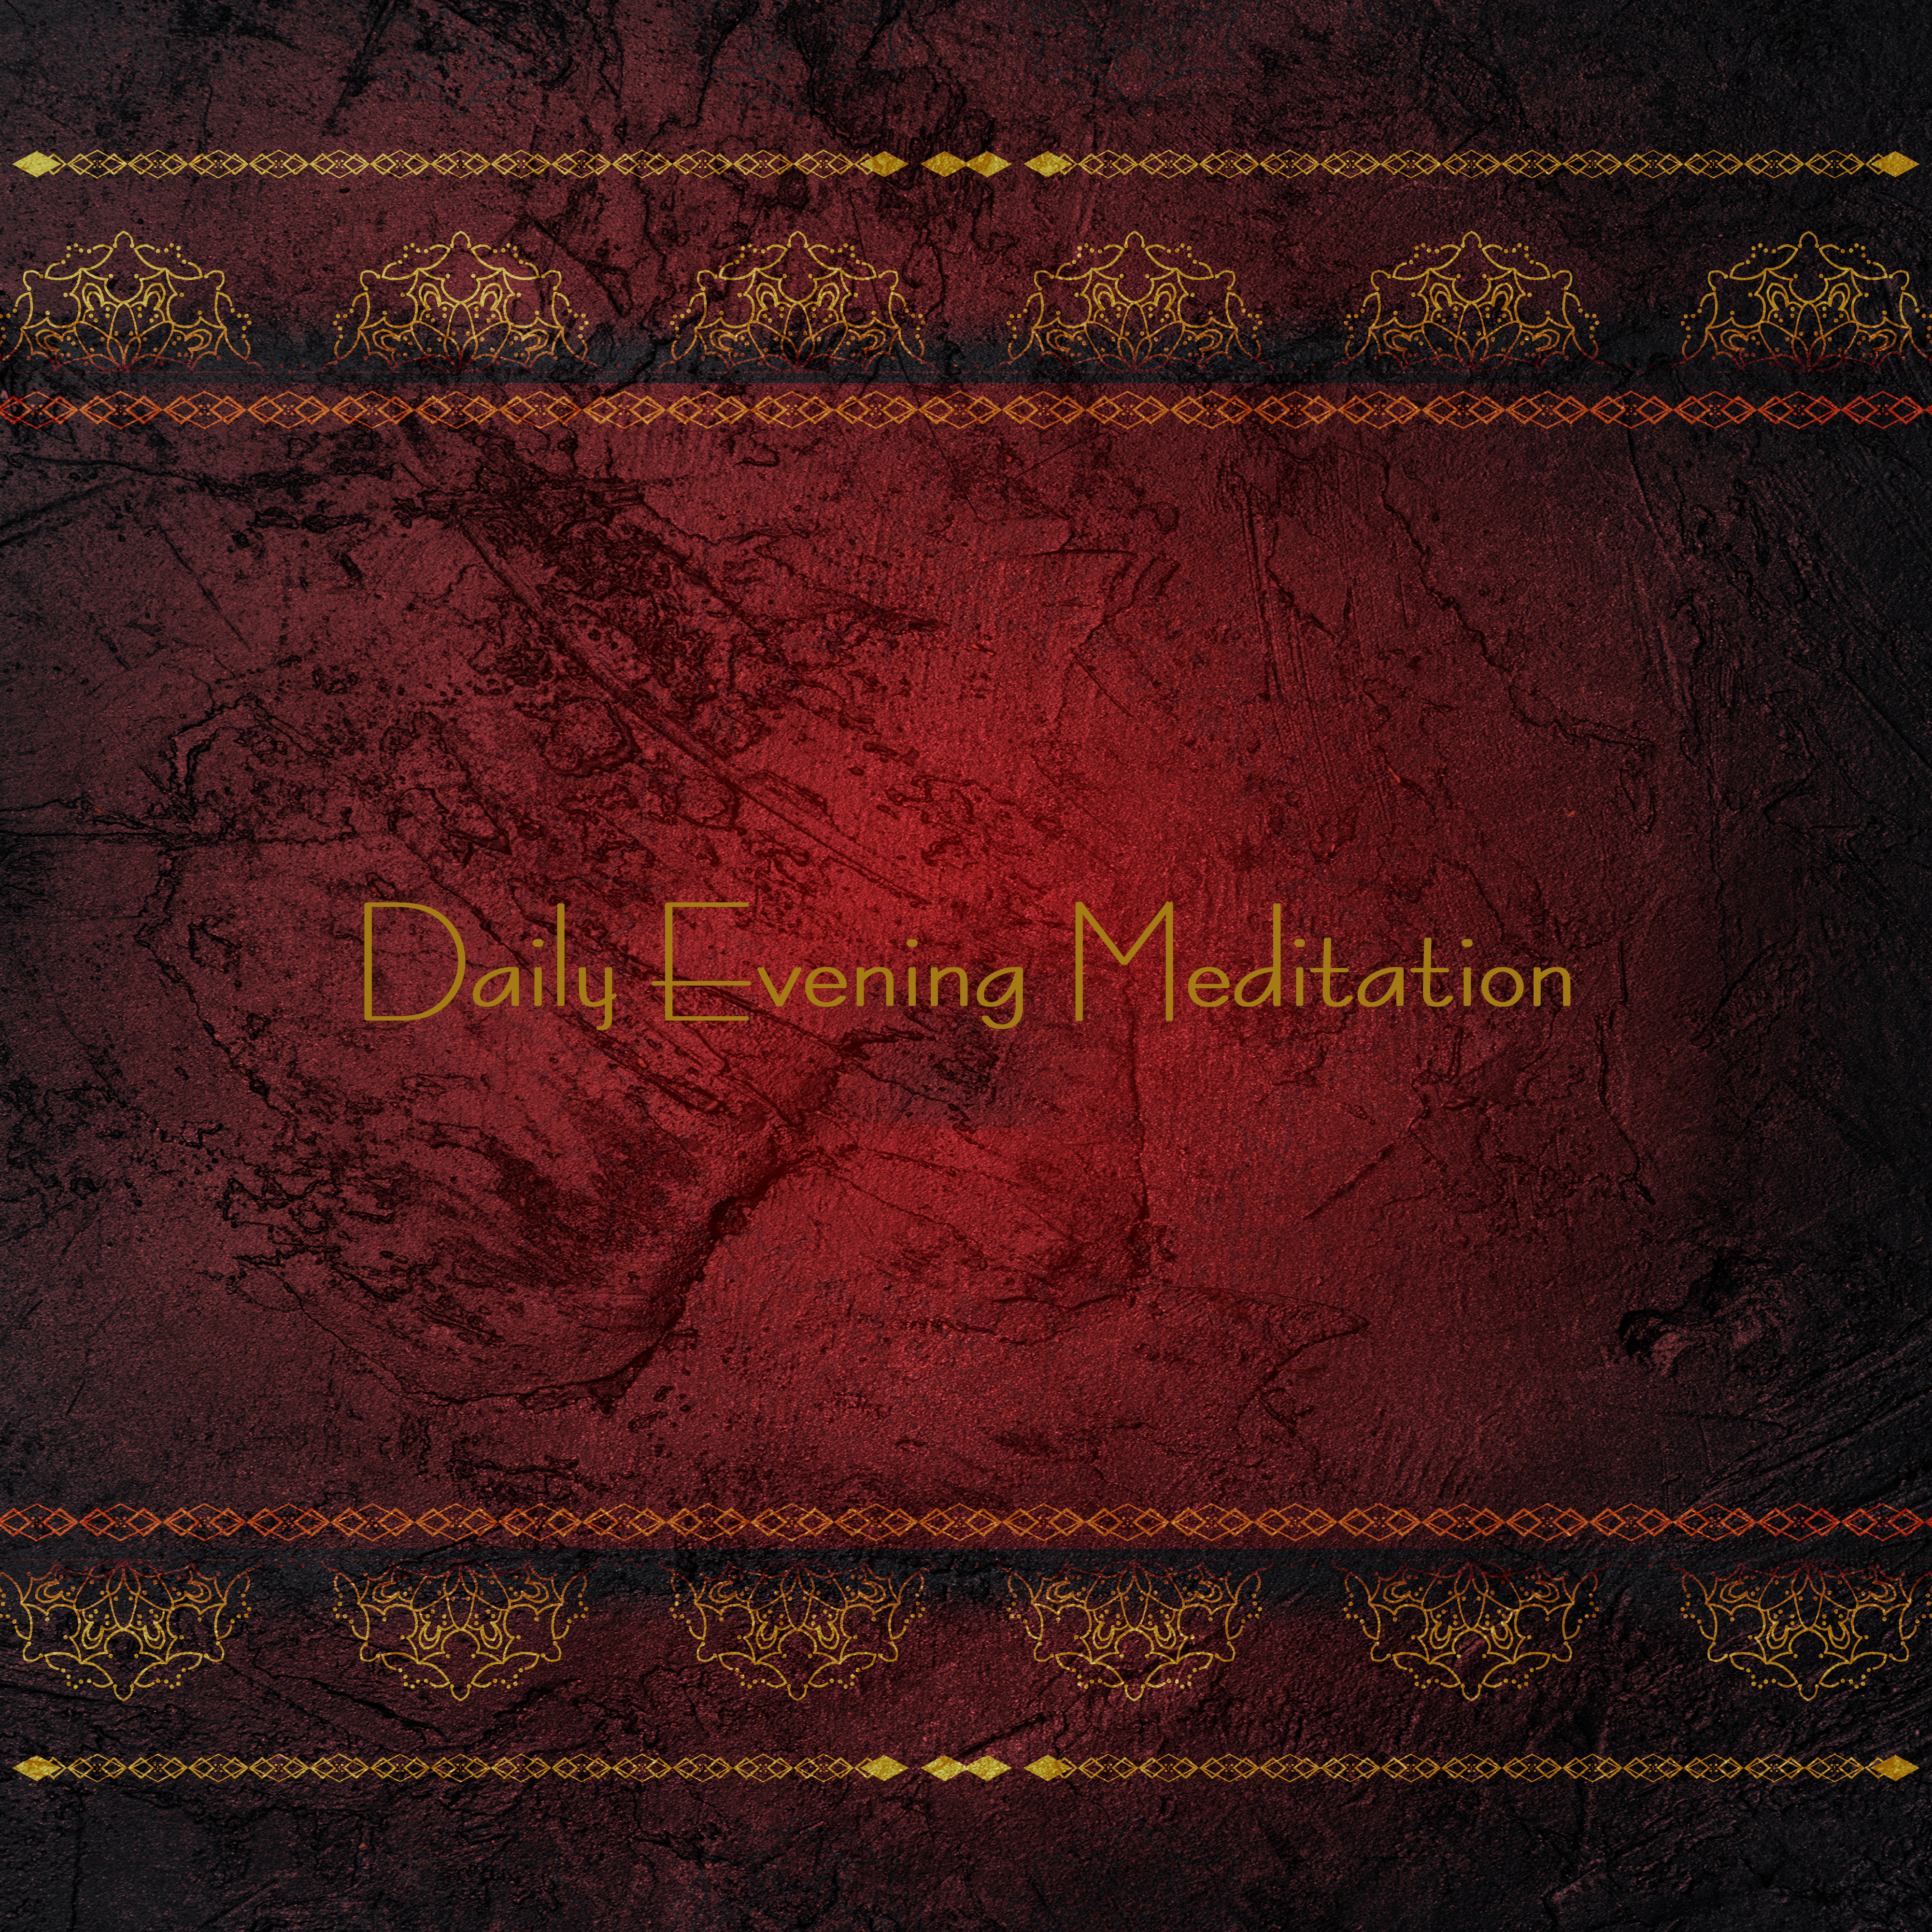 Daily Evening Meditation